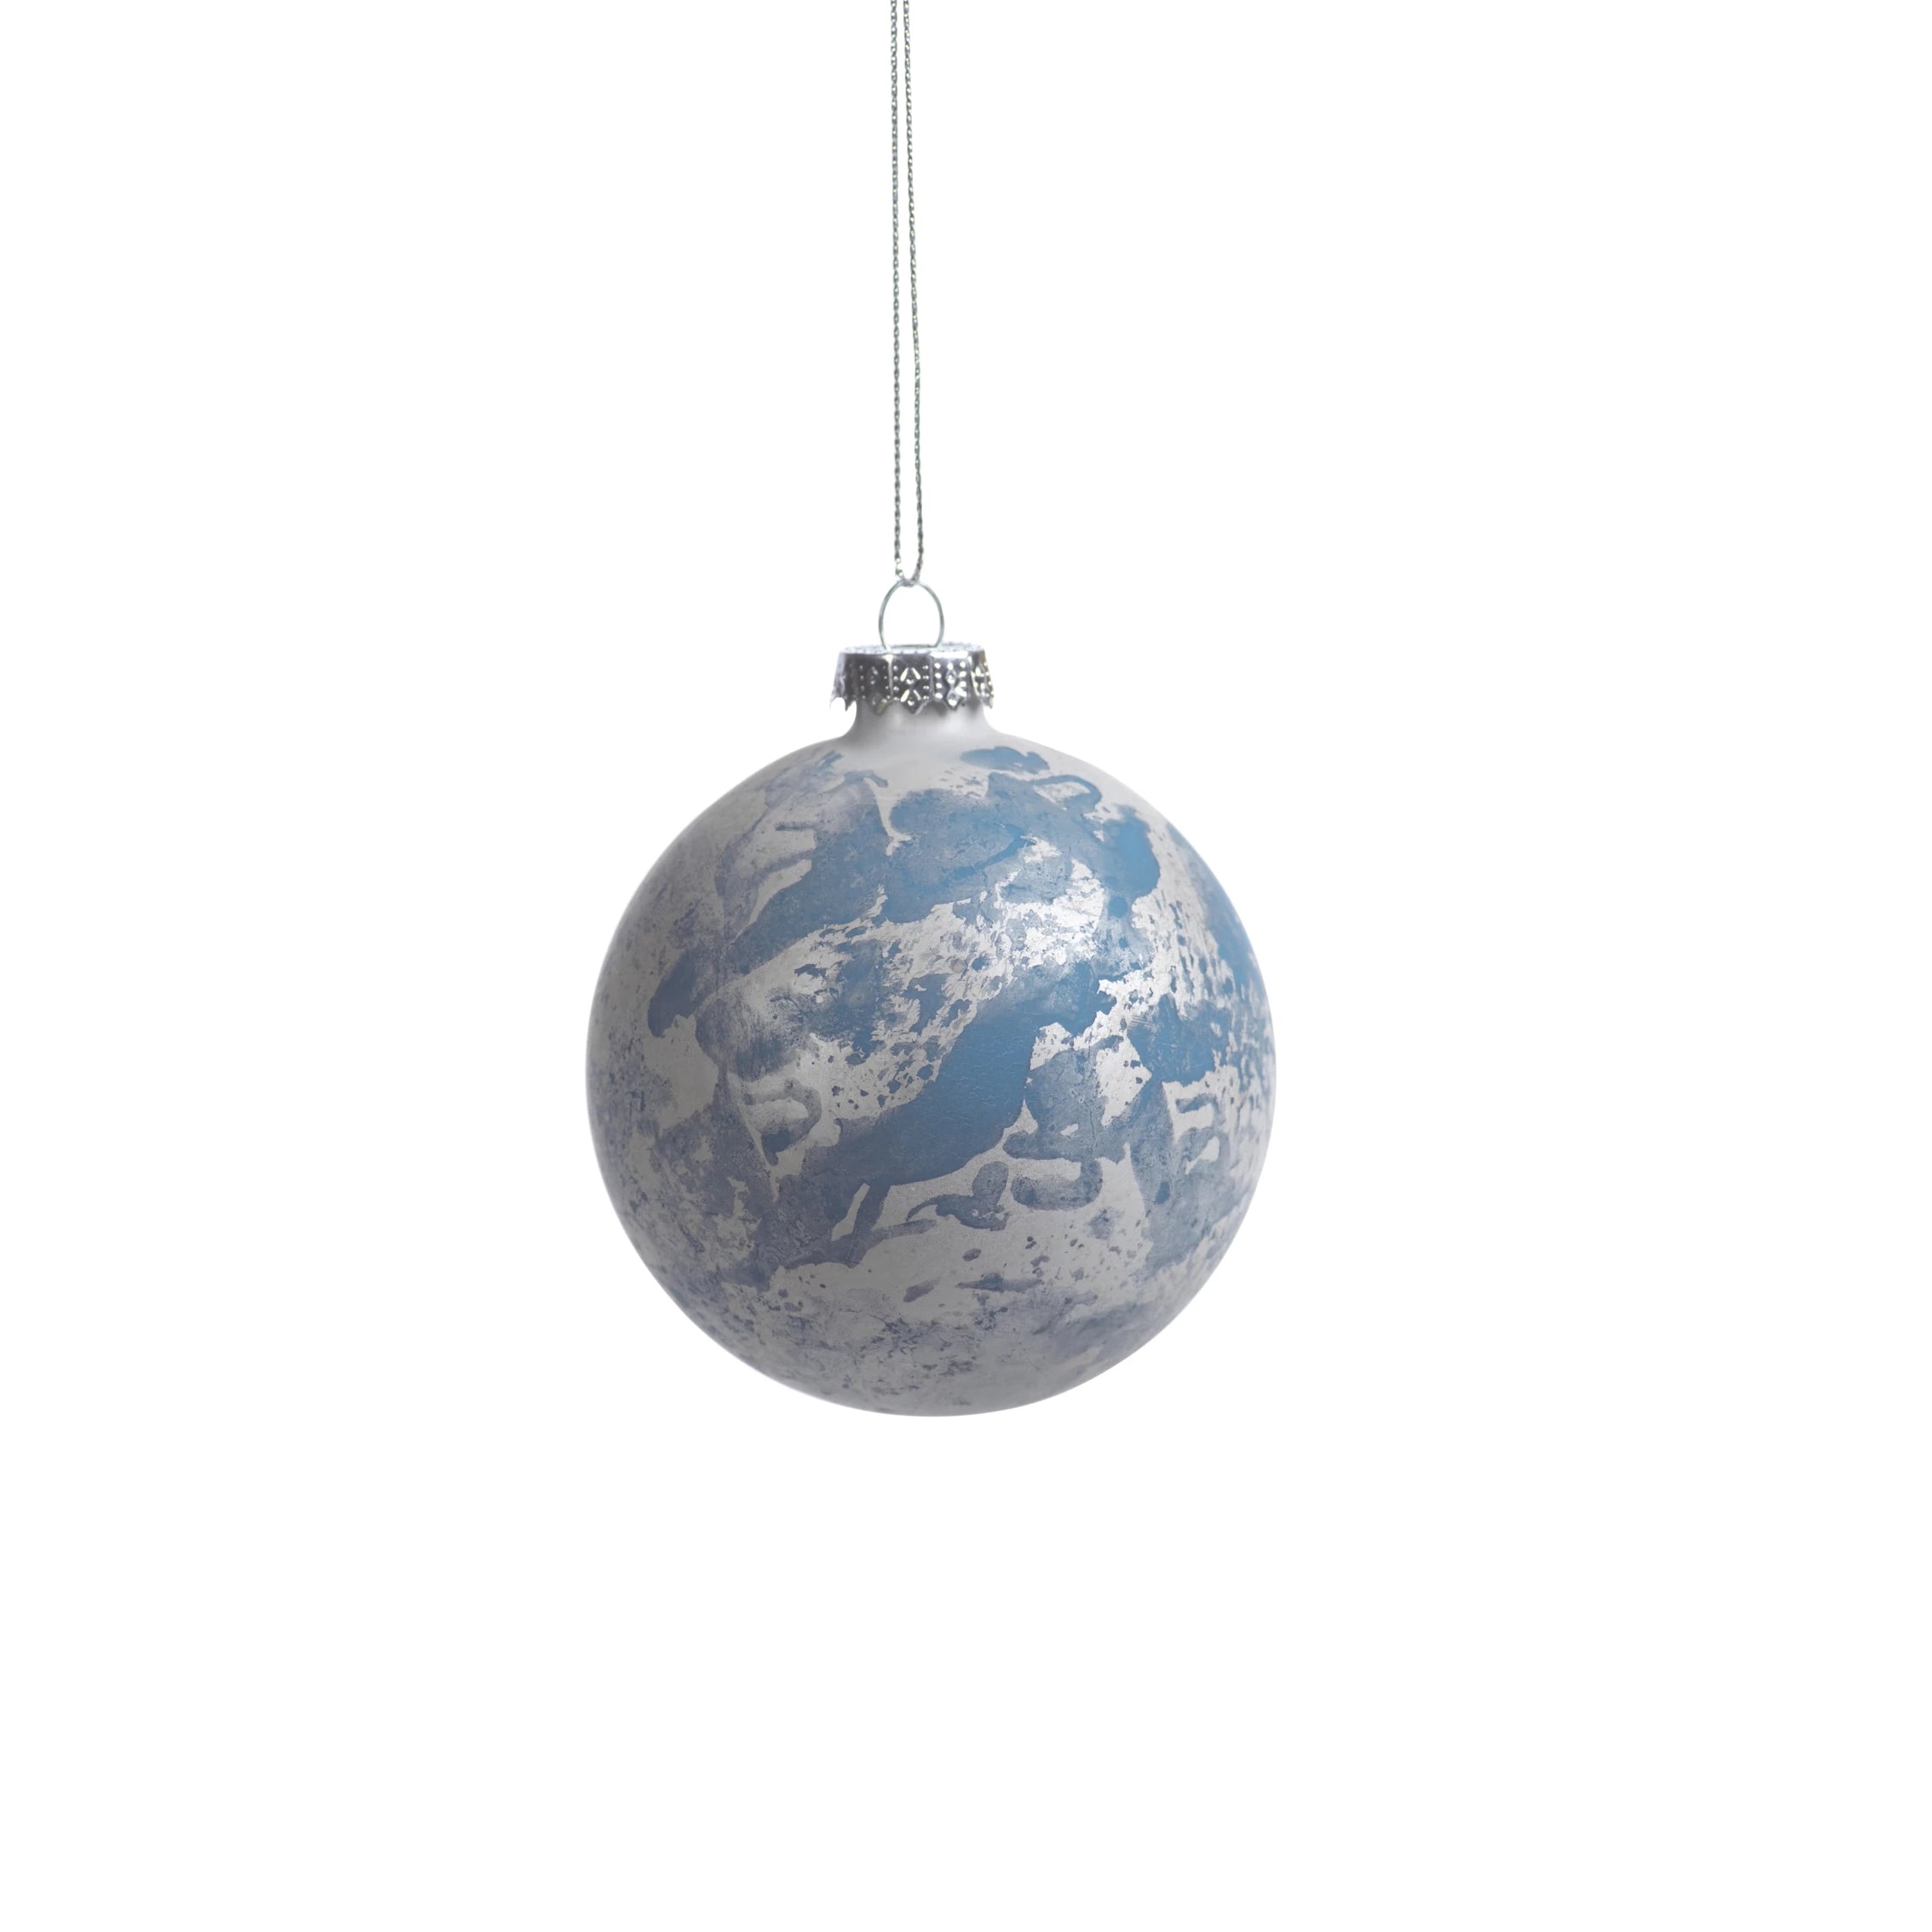 Patch Metallic Ornament - Silver& Blue - CARLYLE AVENUE